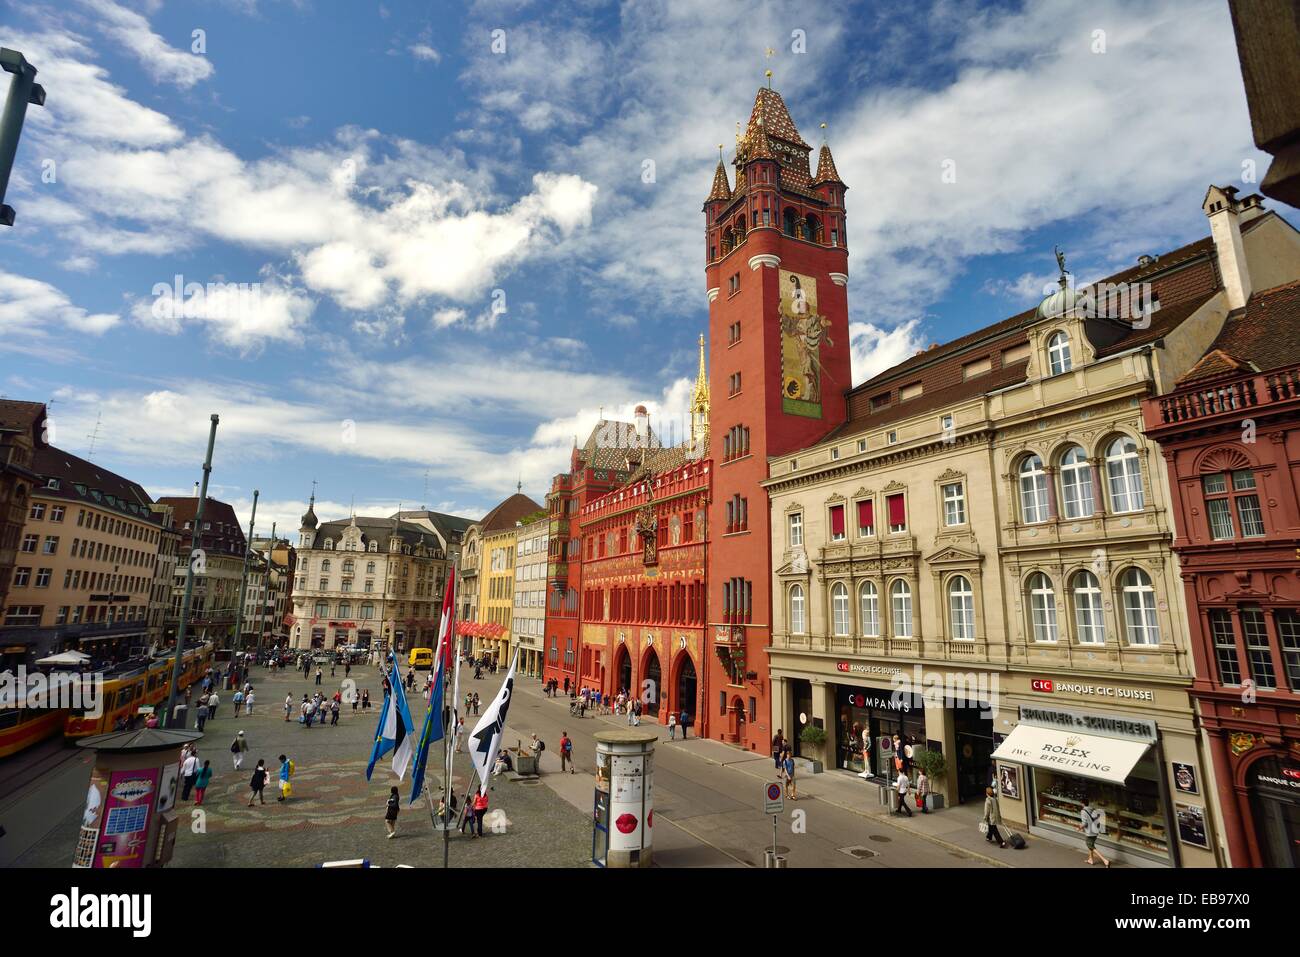 Townhall, Market Square, Basel, Switzerland Stock Photo - Alamy